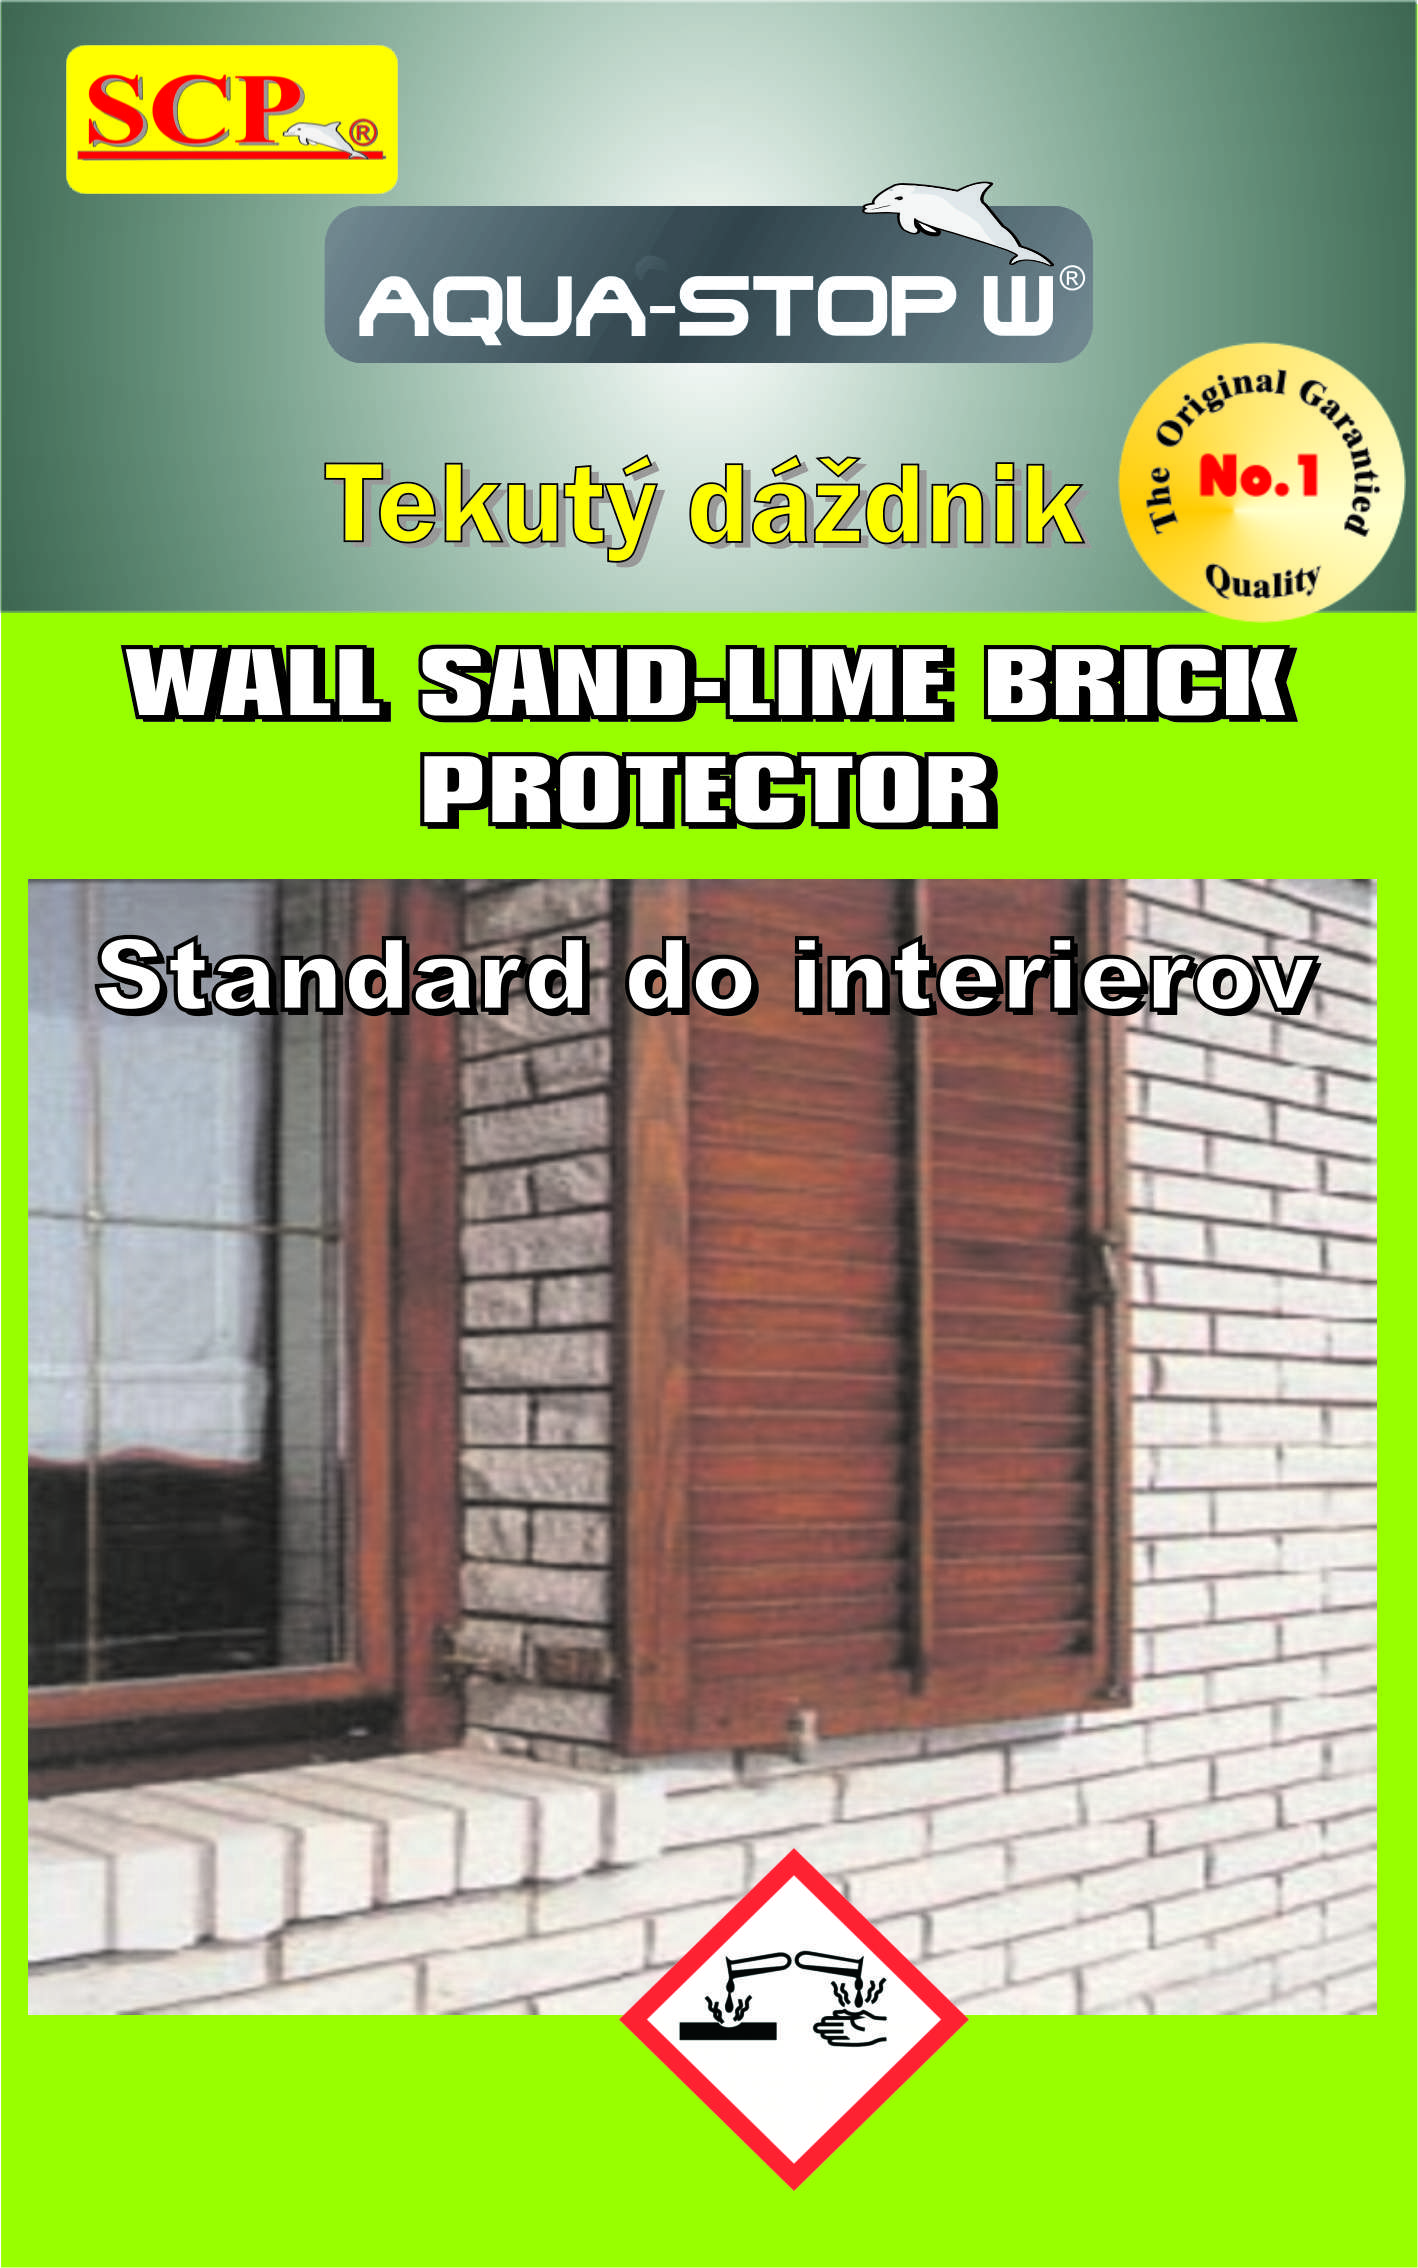 Wall Sand-Lime Brick Protector Standard